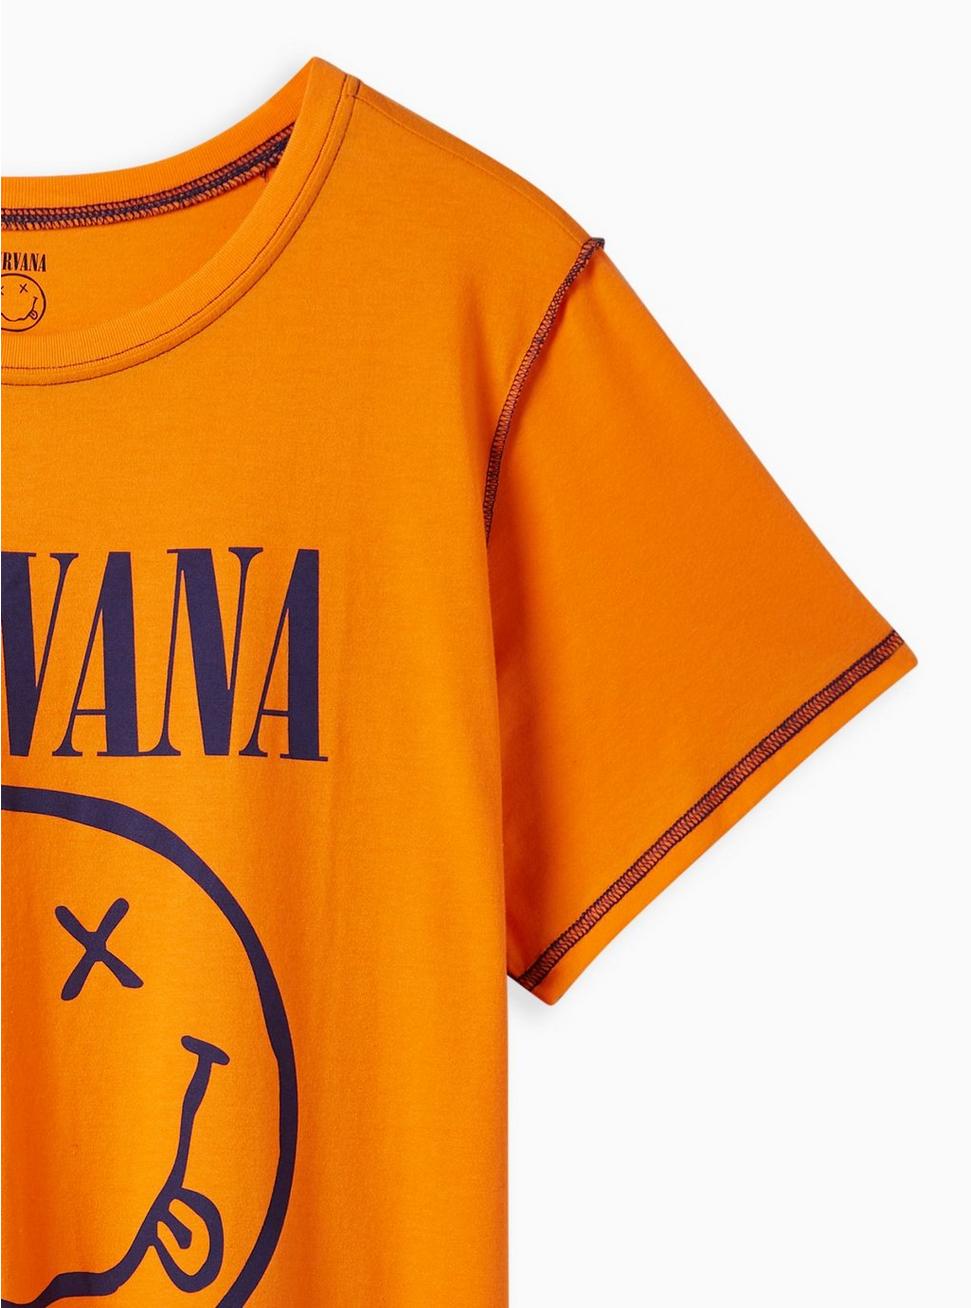 Nirvana Slim Fit Seam Crew Tee - Cotton Orange, ORANGE, alternate